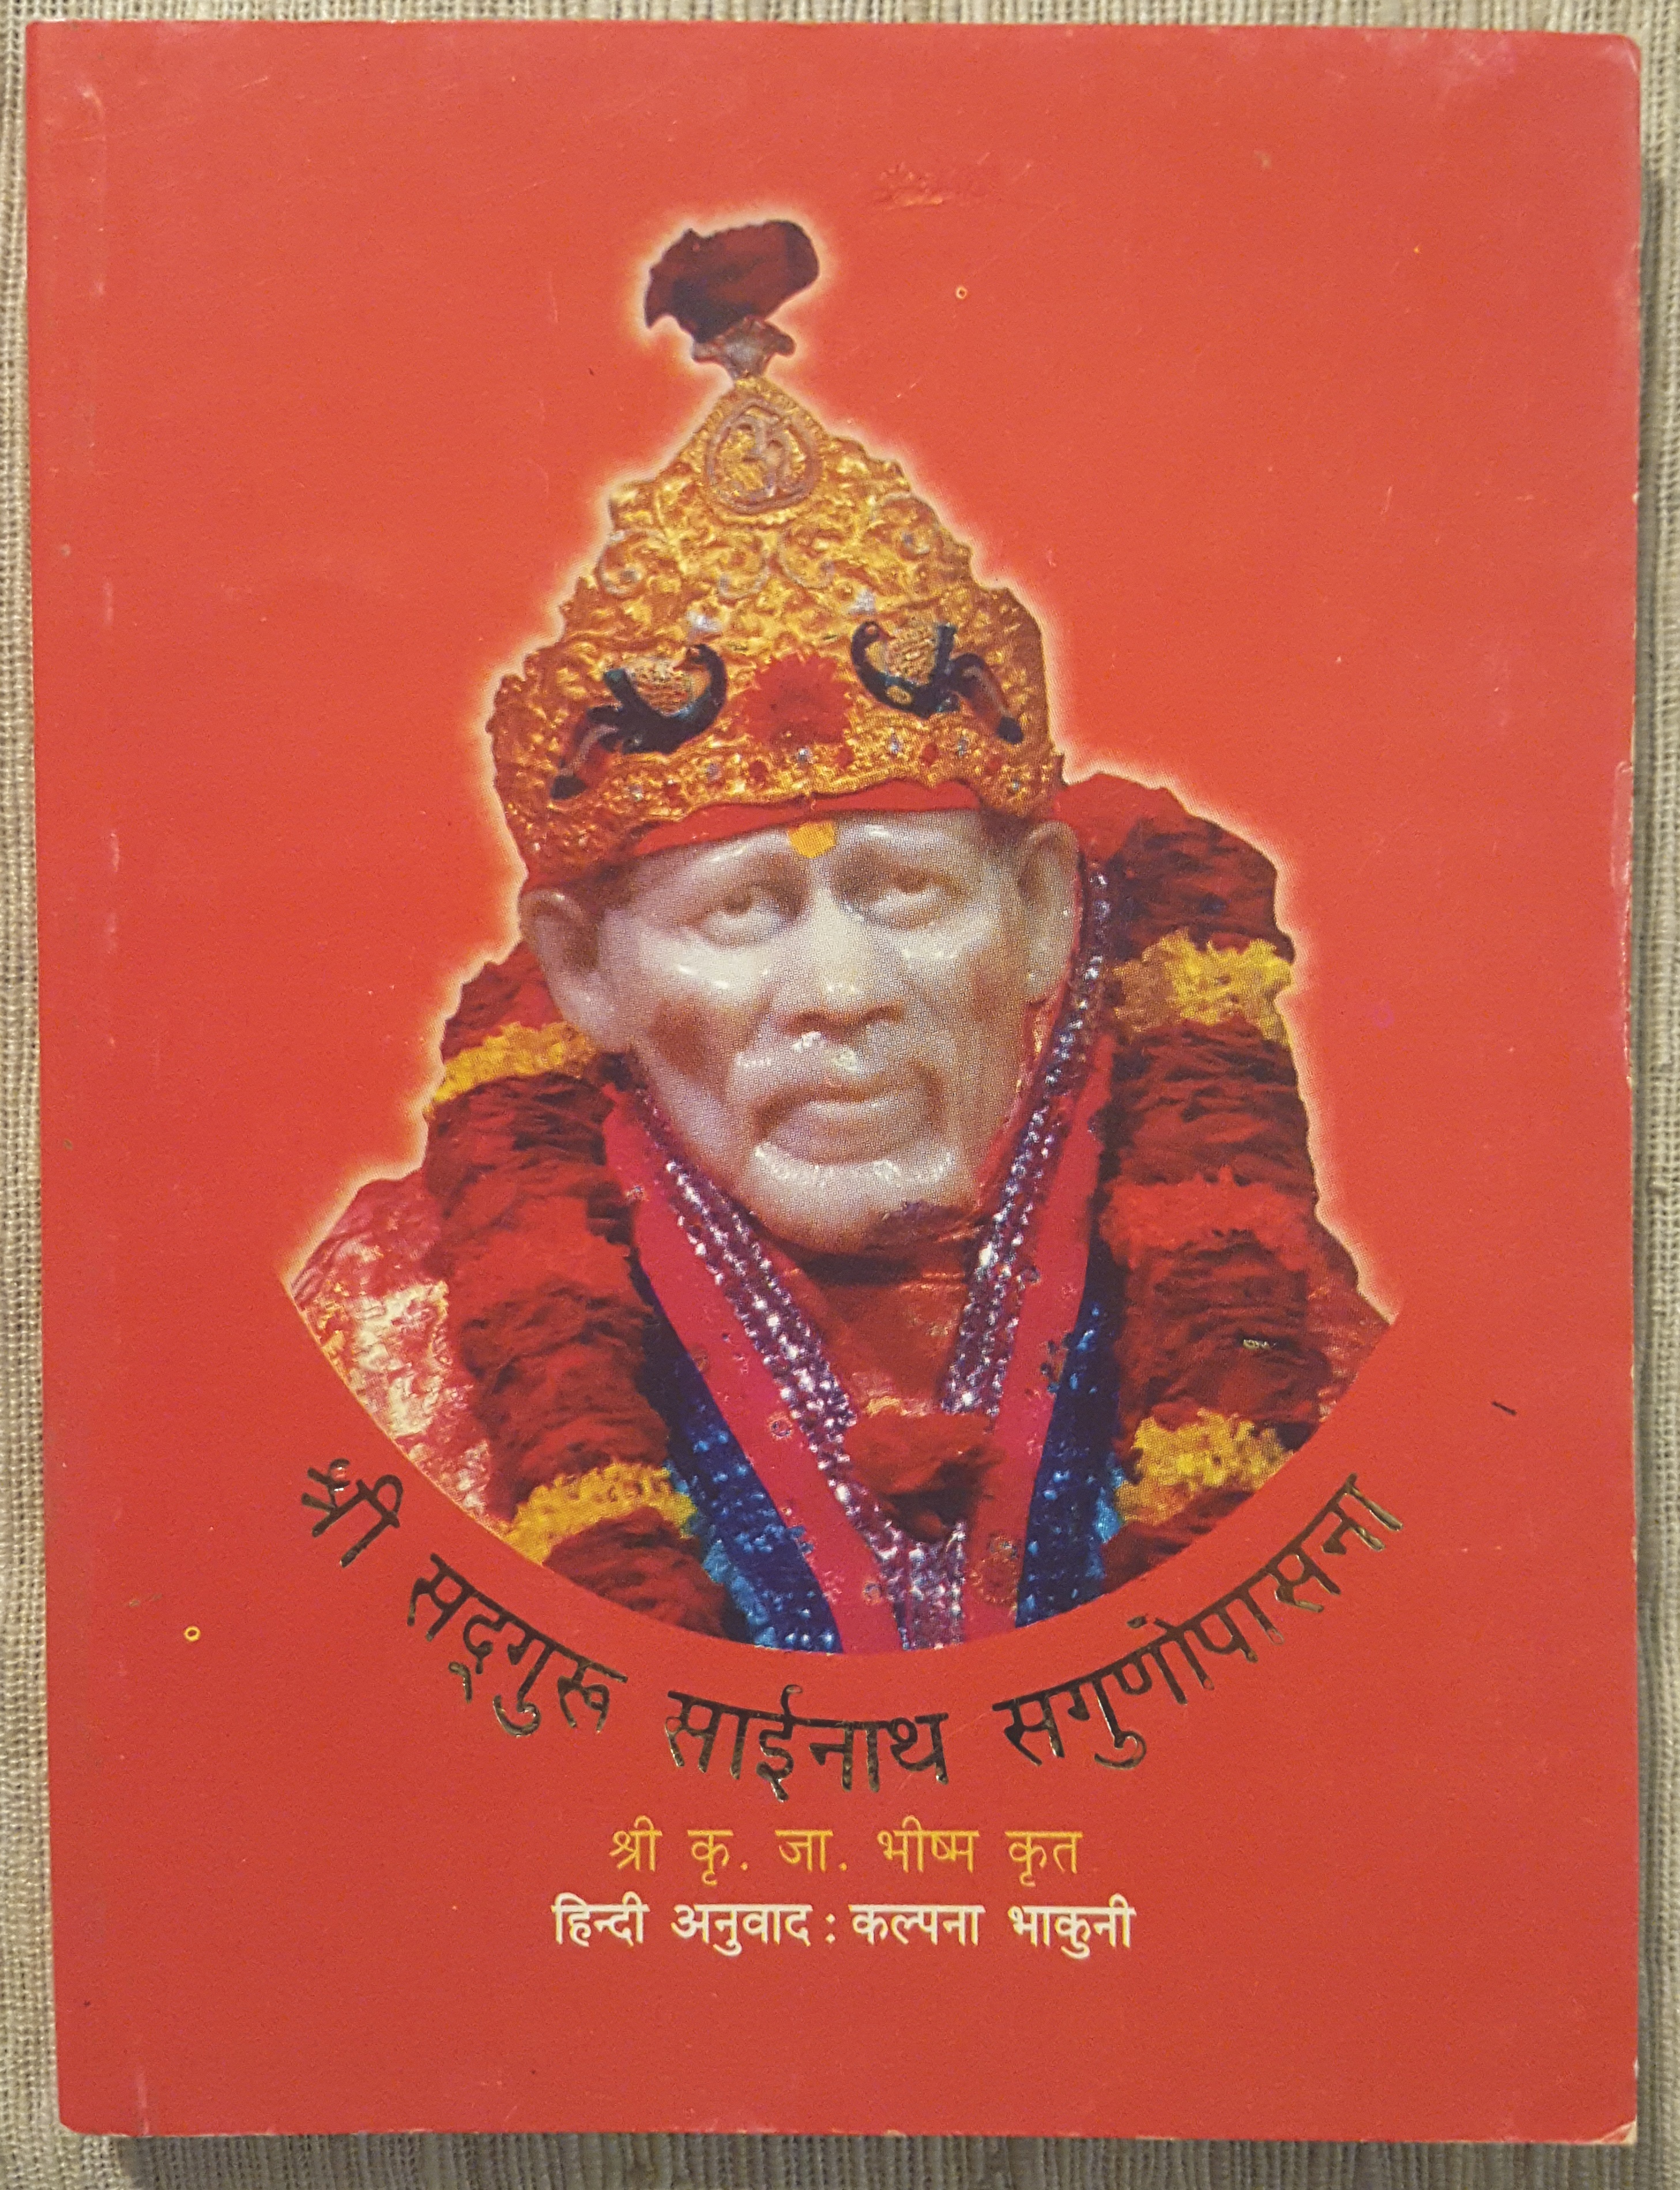 Shirdi Sai Baba Temple Frankfurt Germany (Deutschland) recommended book - Shri Sainath Sagunopasna .